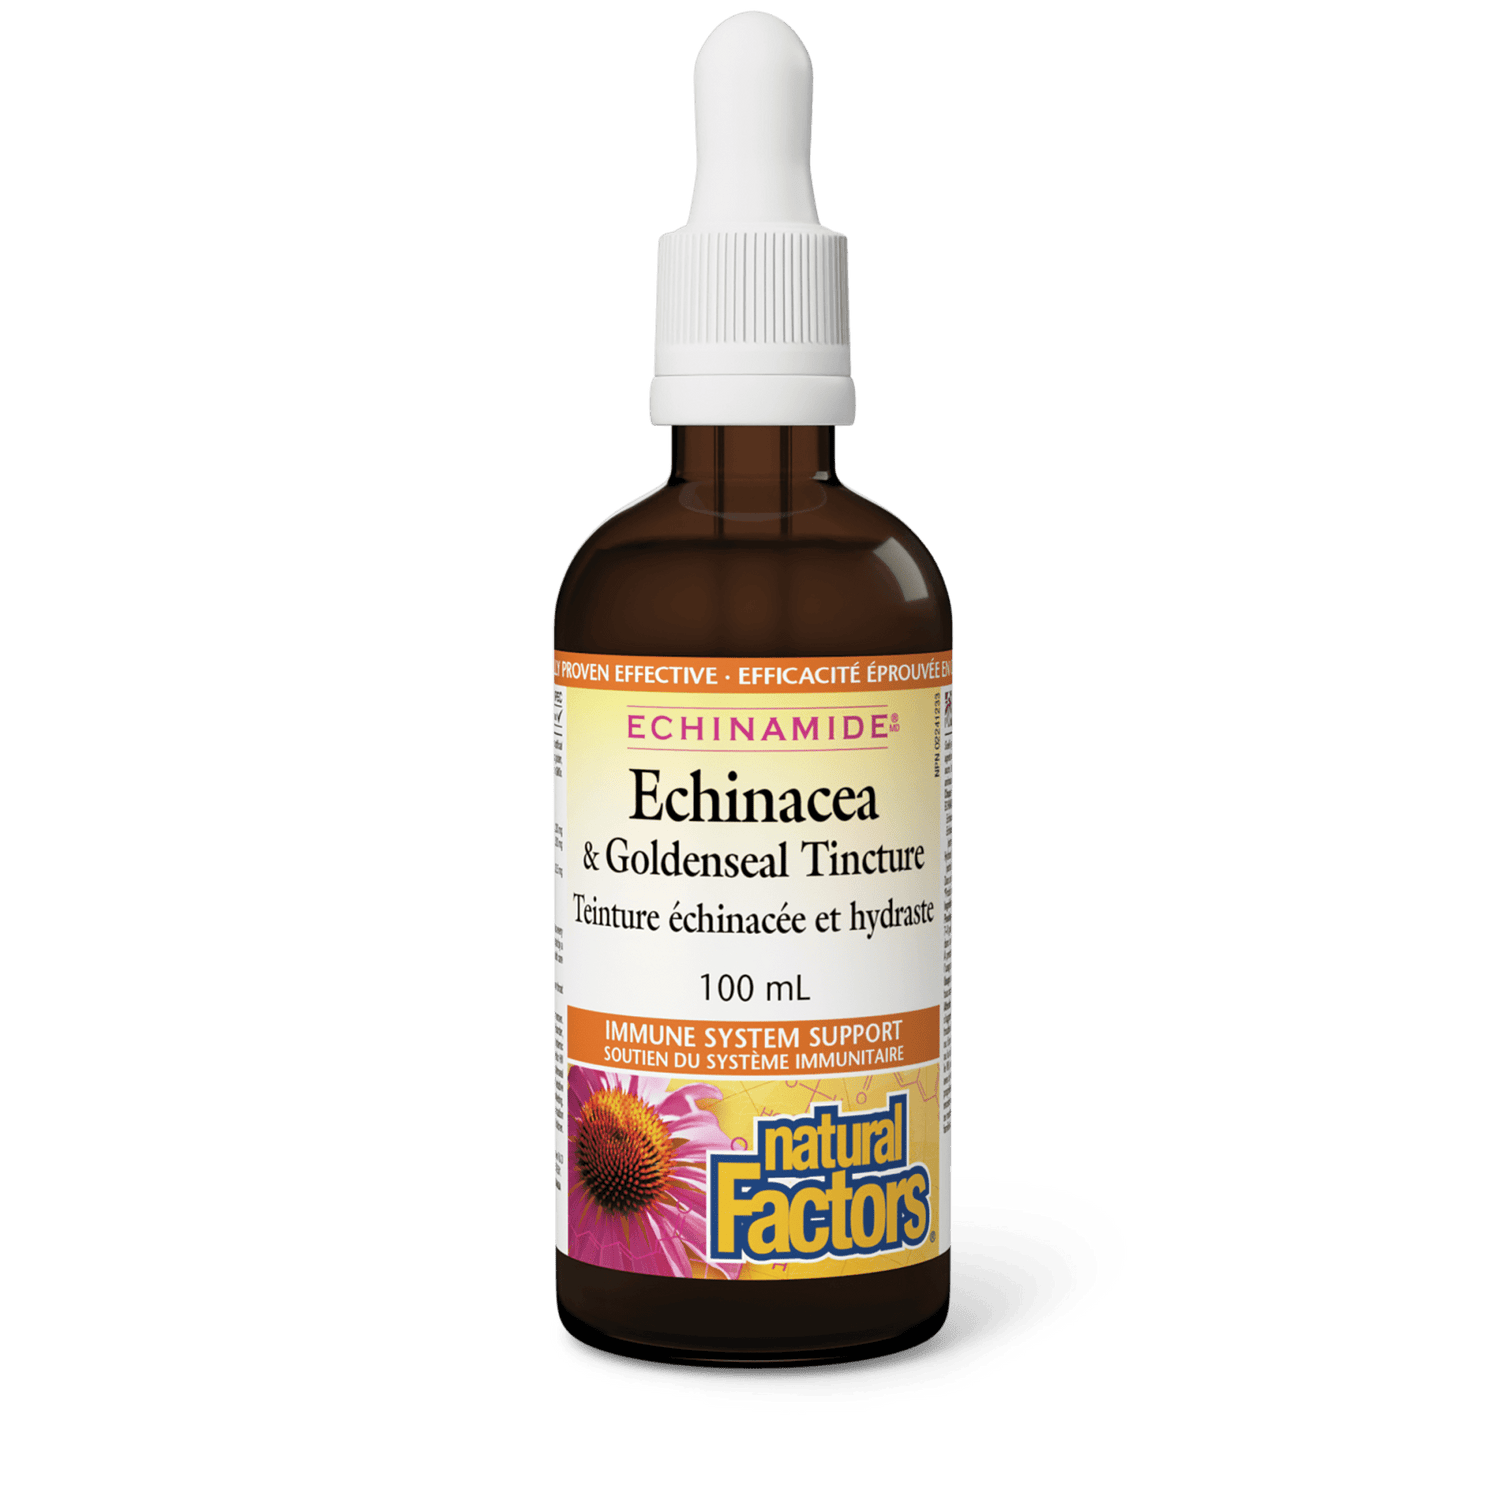 Echinacea & Goldenseal Tincture, ECHINAMIDE, Natural Factors|v|image|4731